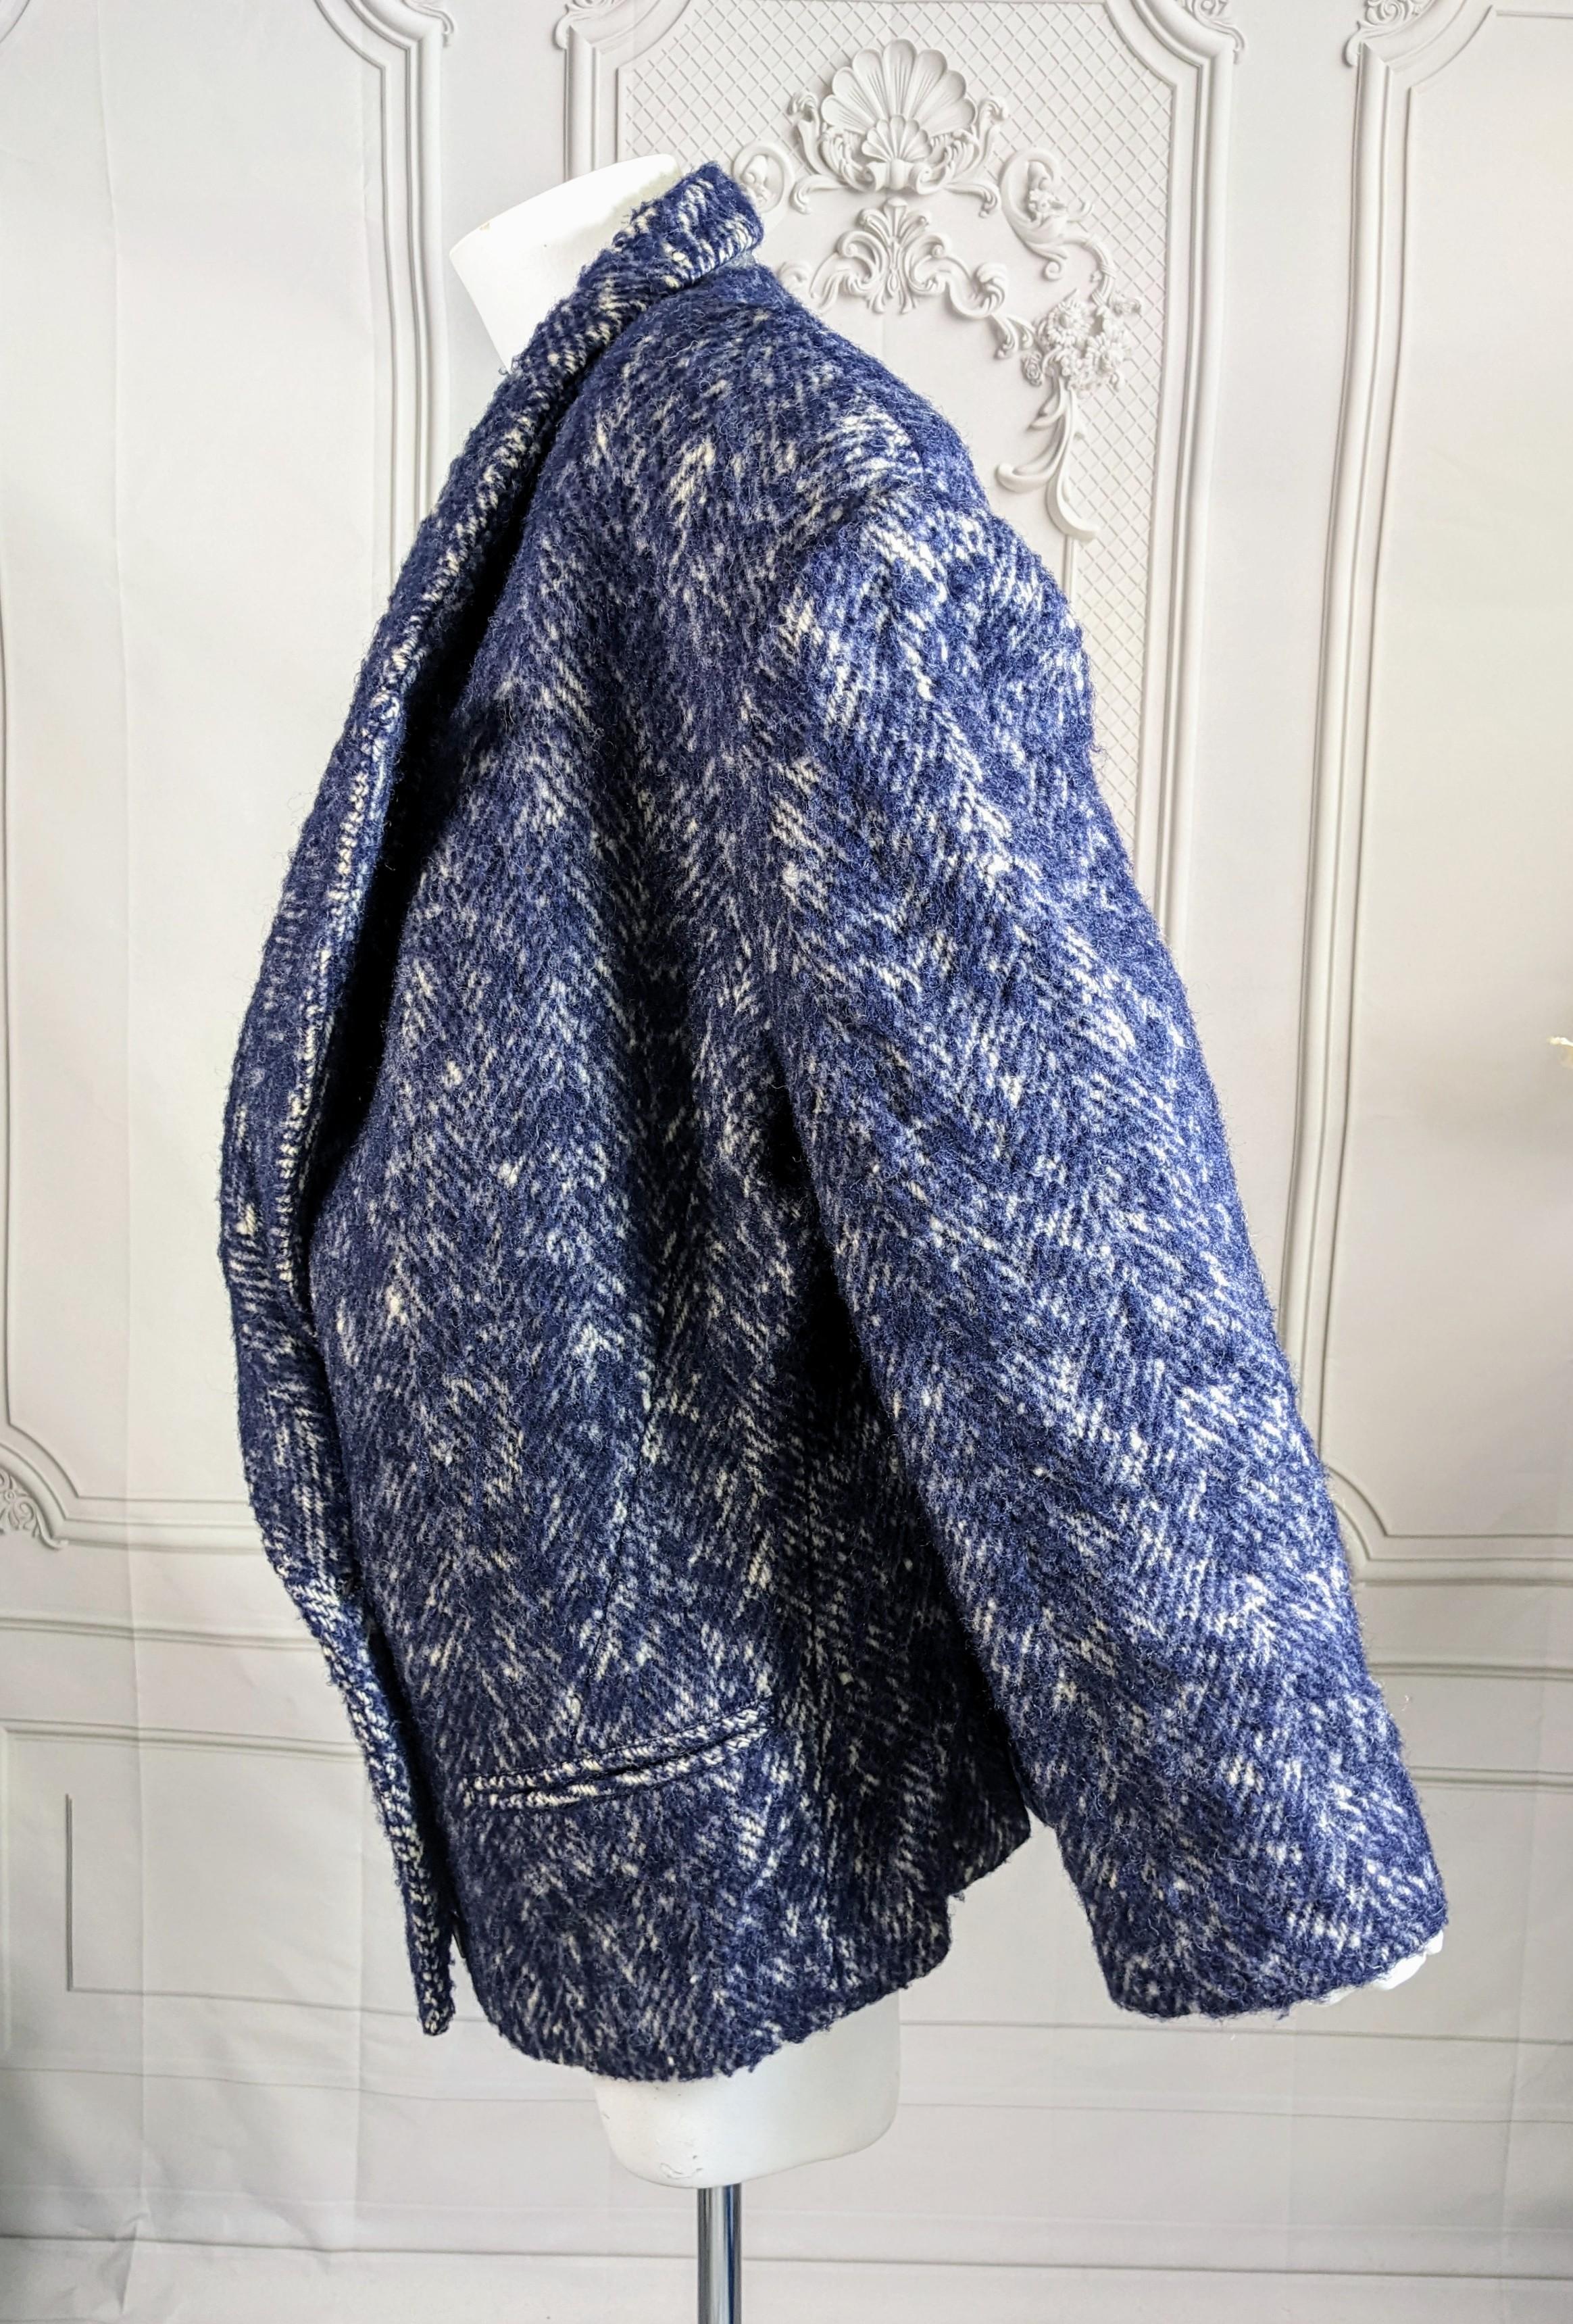 Yohji Yamamoto Rare Early Tweed Jacket  For Sale 5